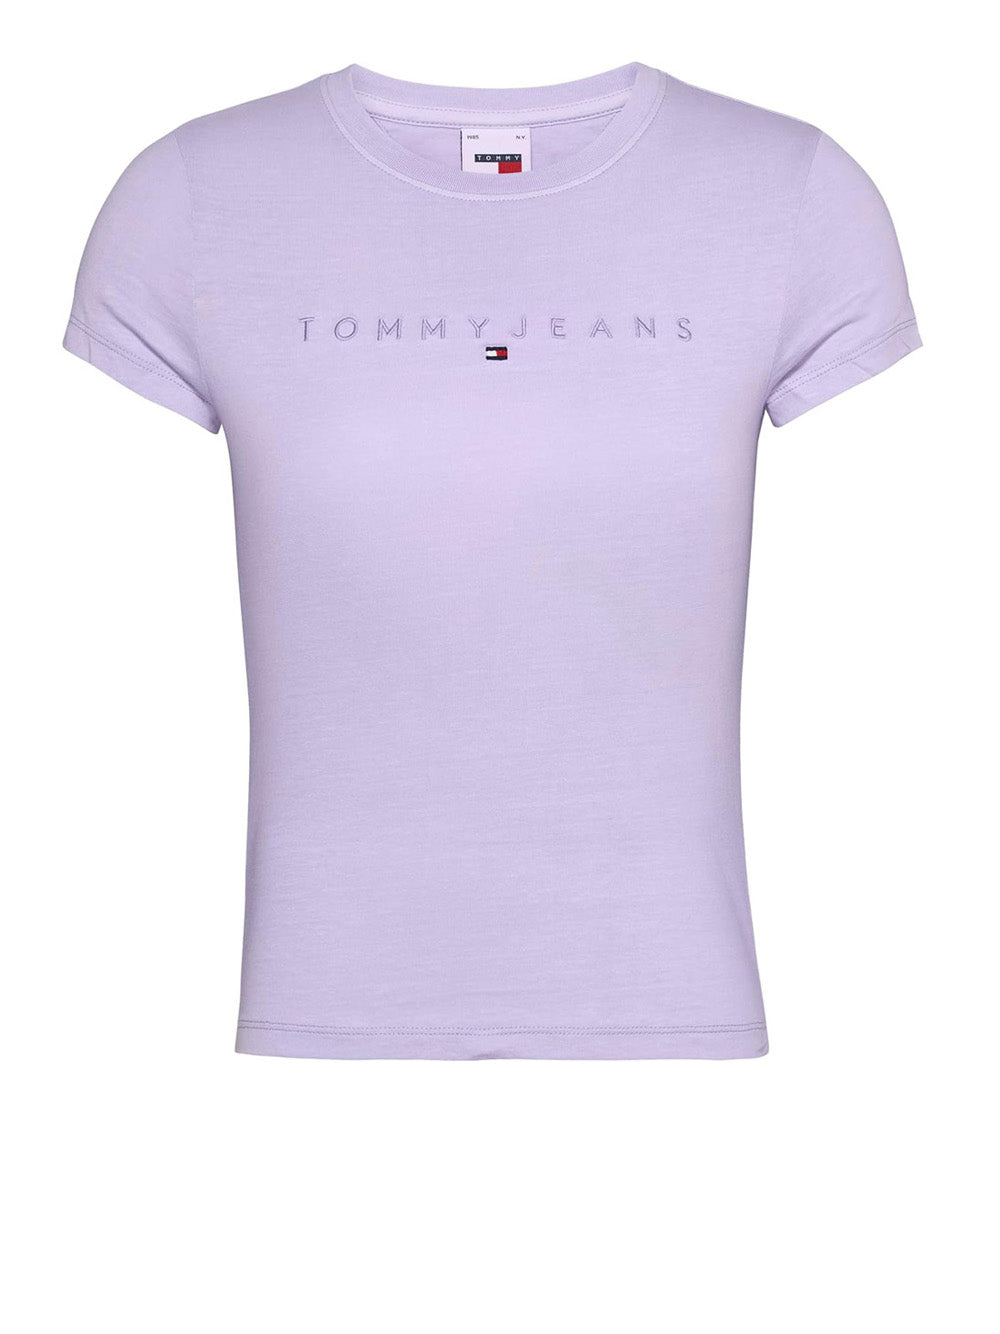 TOMMY HILFIGER T-shirt Donna - Lilla modello DW0DW17827